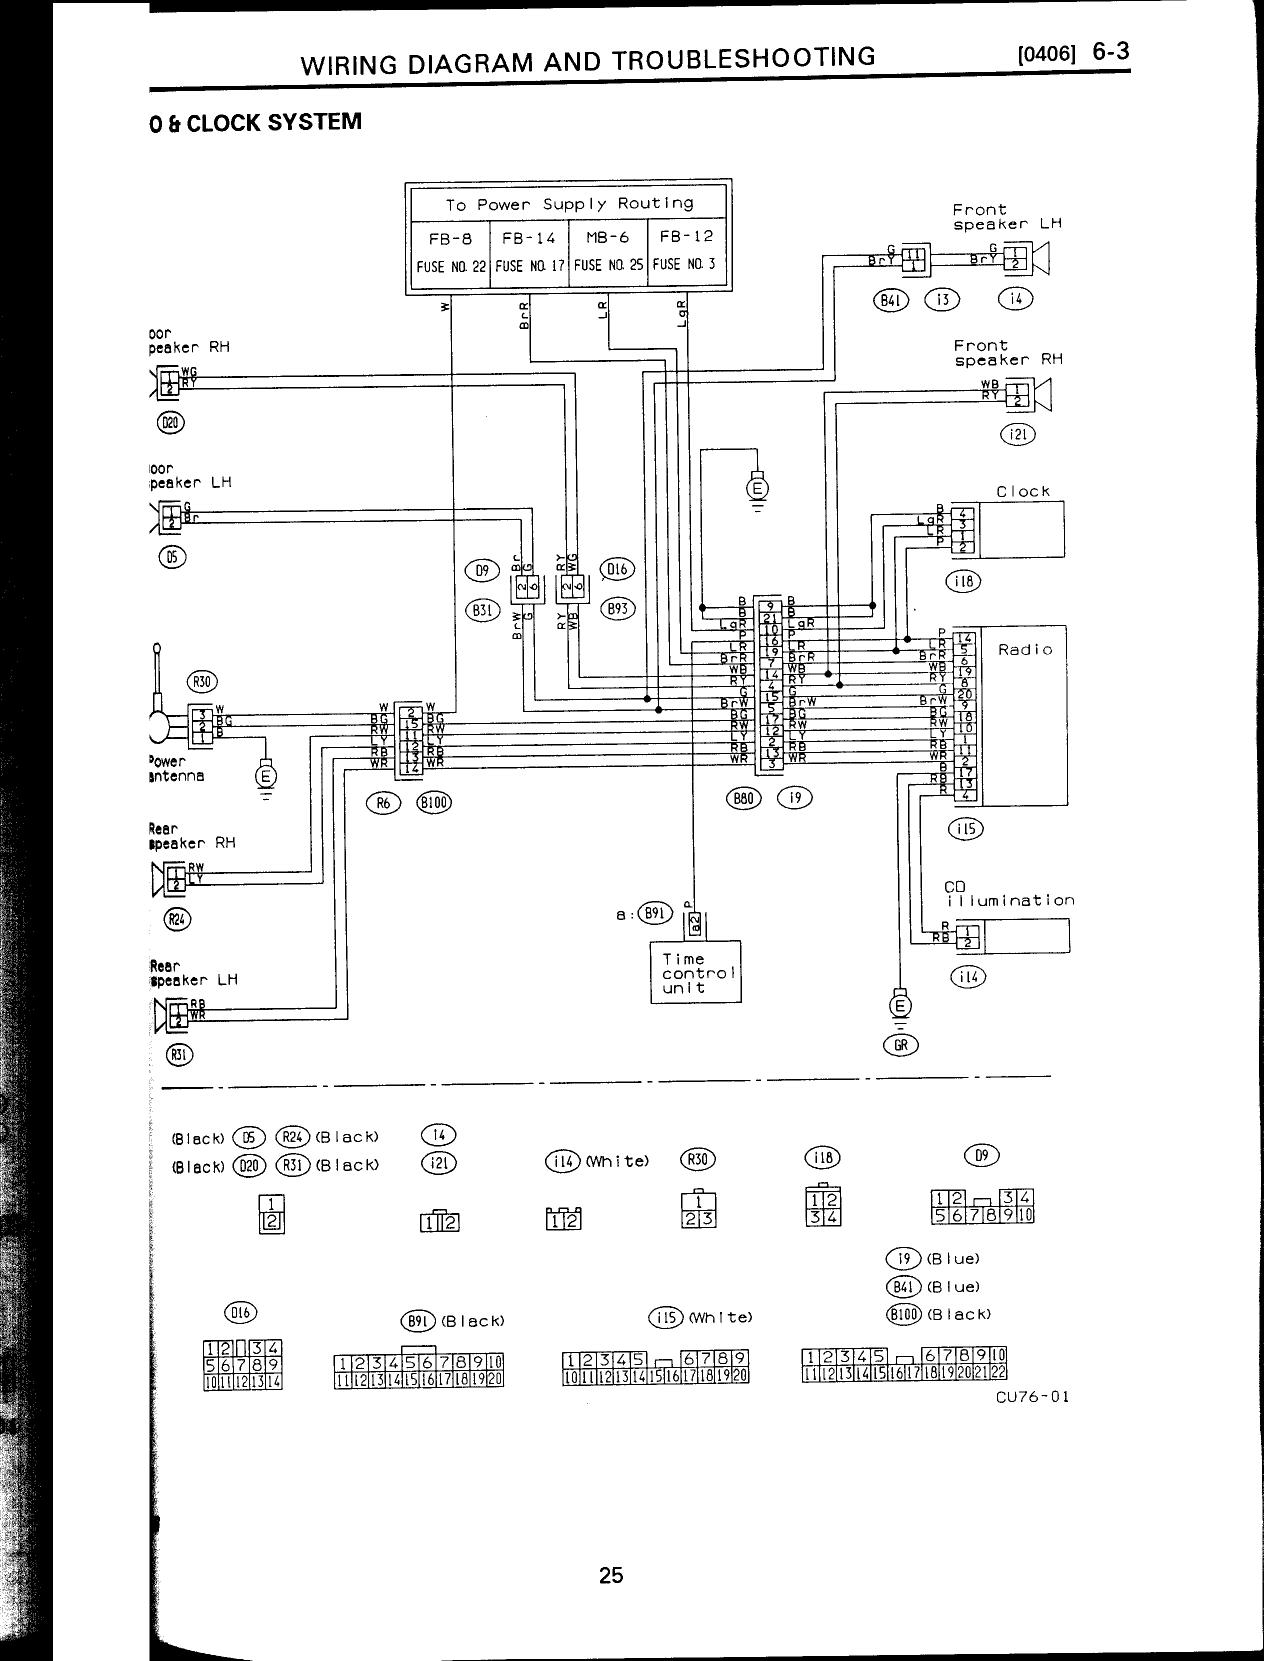 SUBARU - Car PDF Manual, Wiring Diagram & Fault Codes DTC Subaru Audio Wiring Diagram automotive-manuals.net